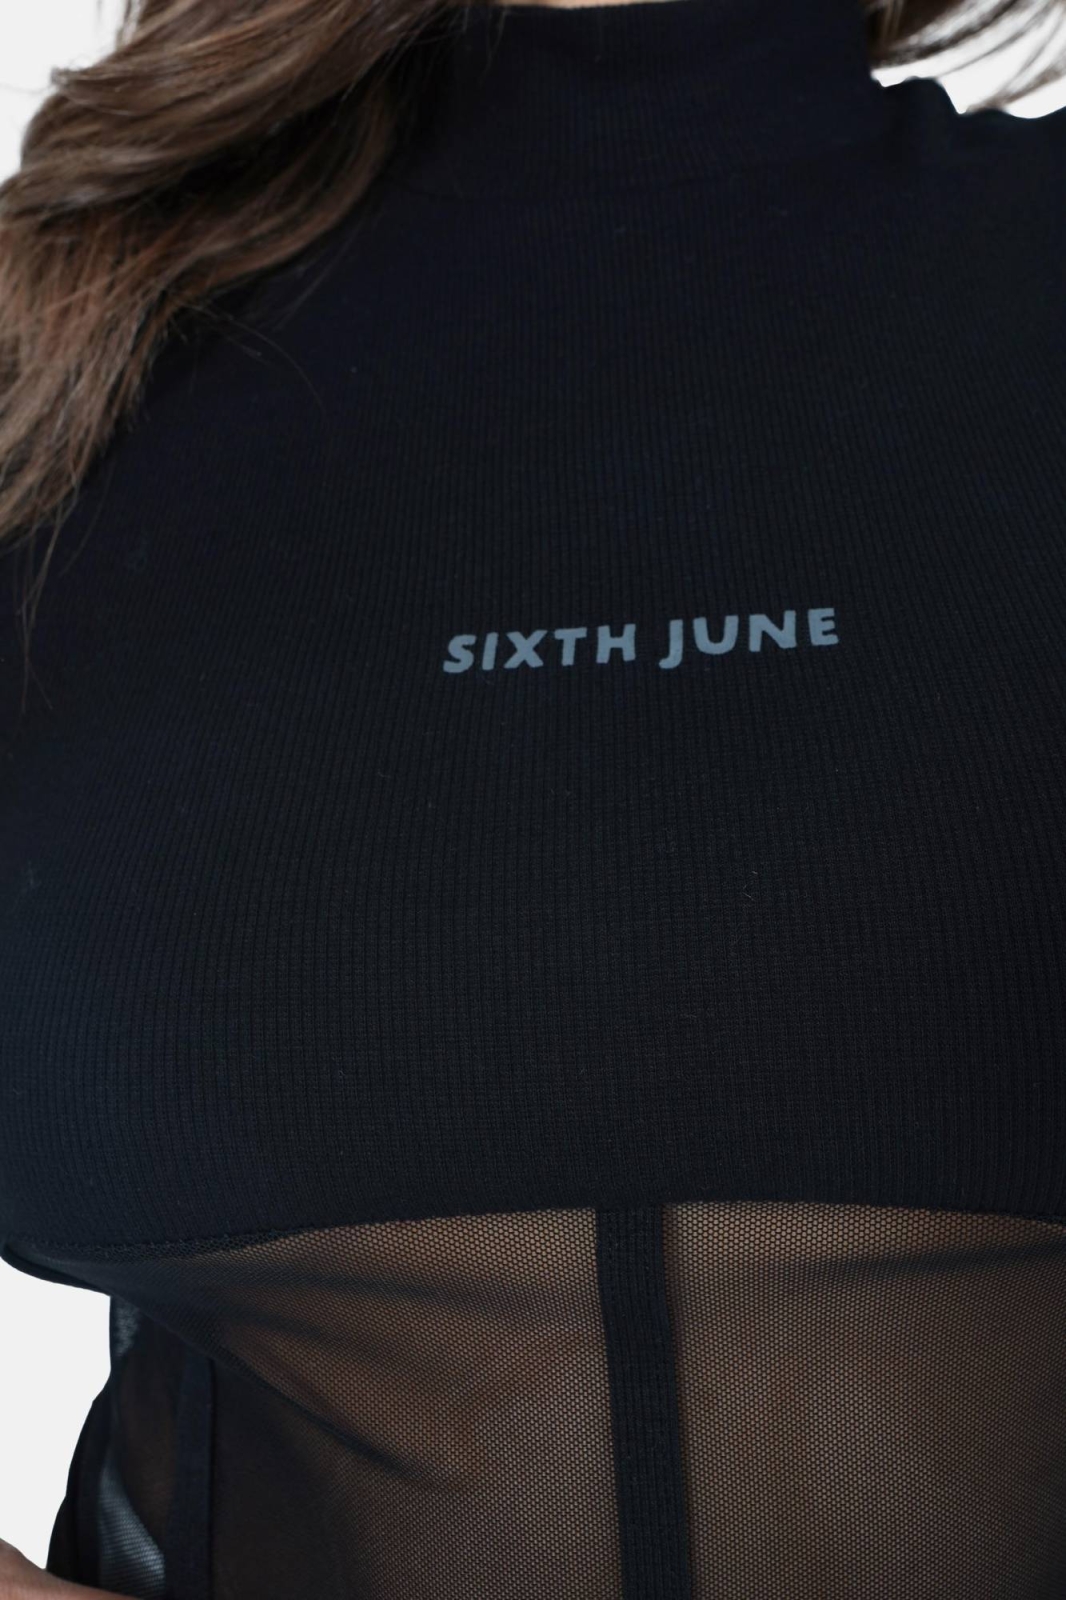 Sixth June Cropped Transparent Corset - Black